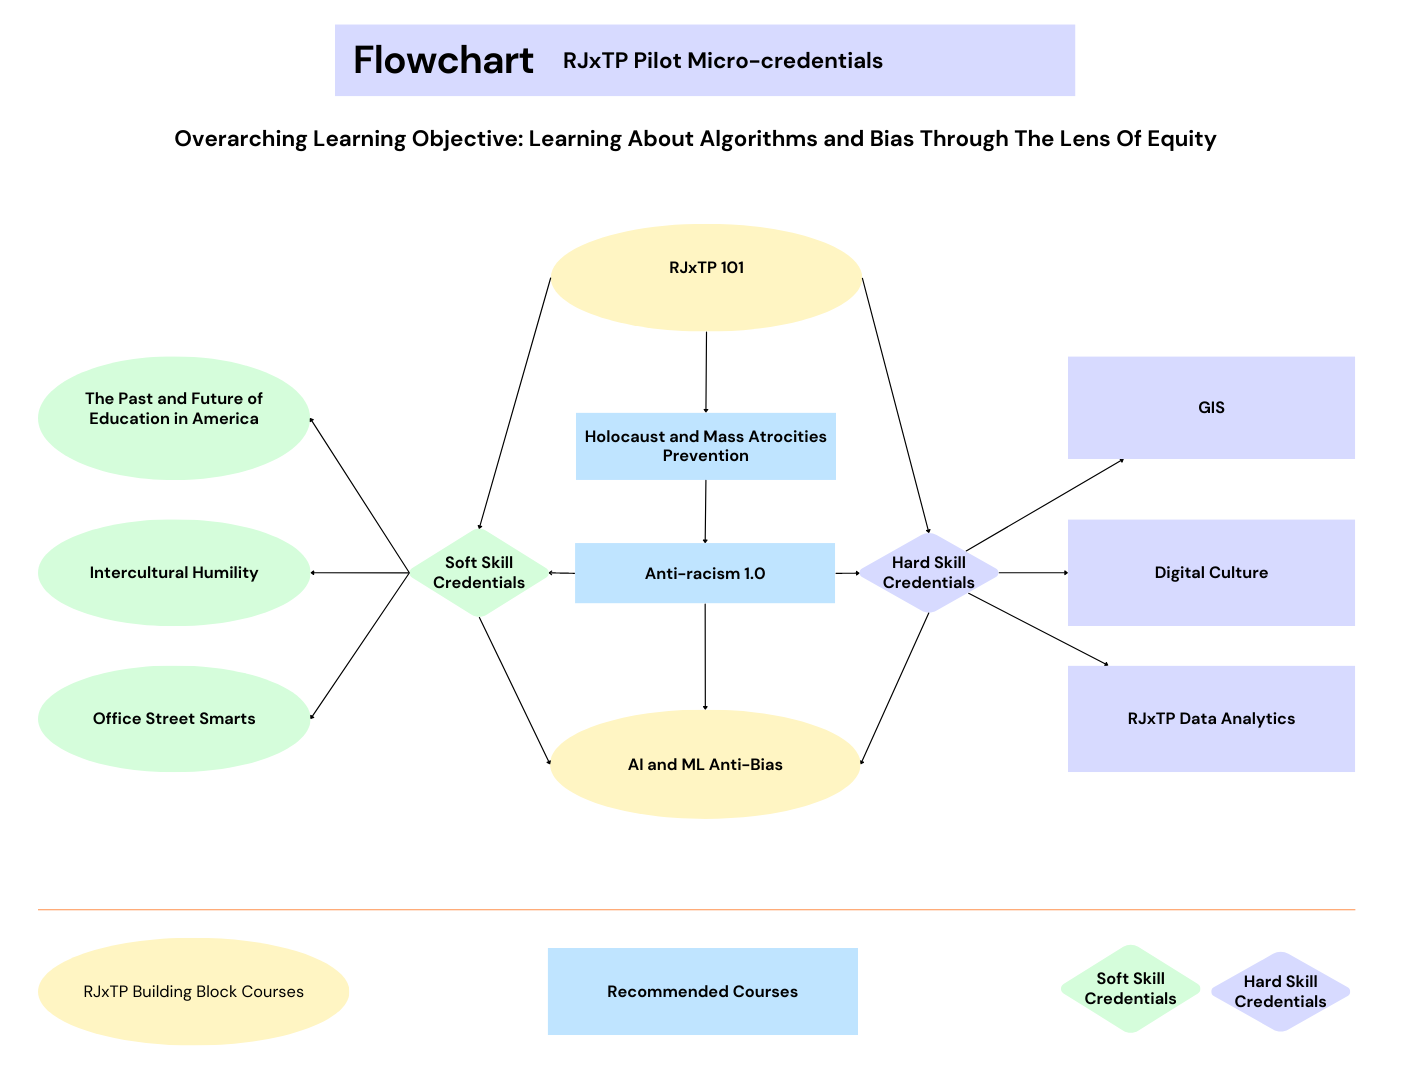 Flowchart showing the RJxTP pilot micro-credentials.